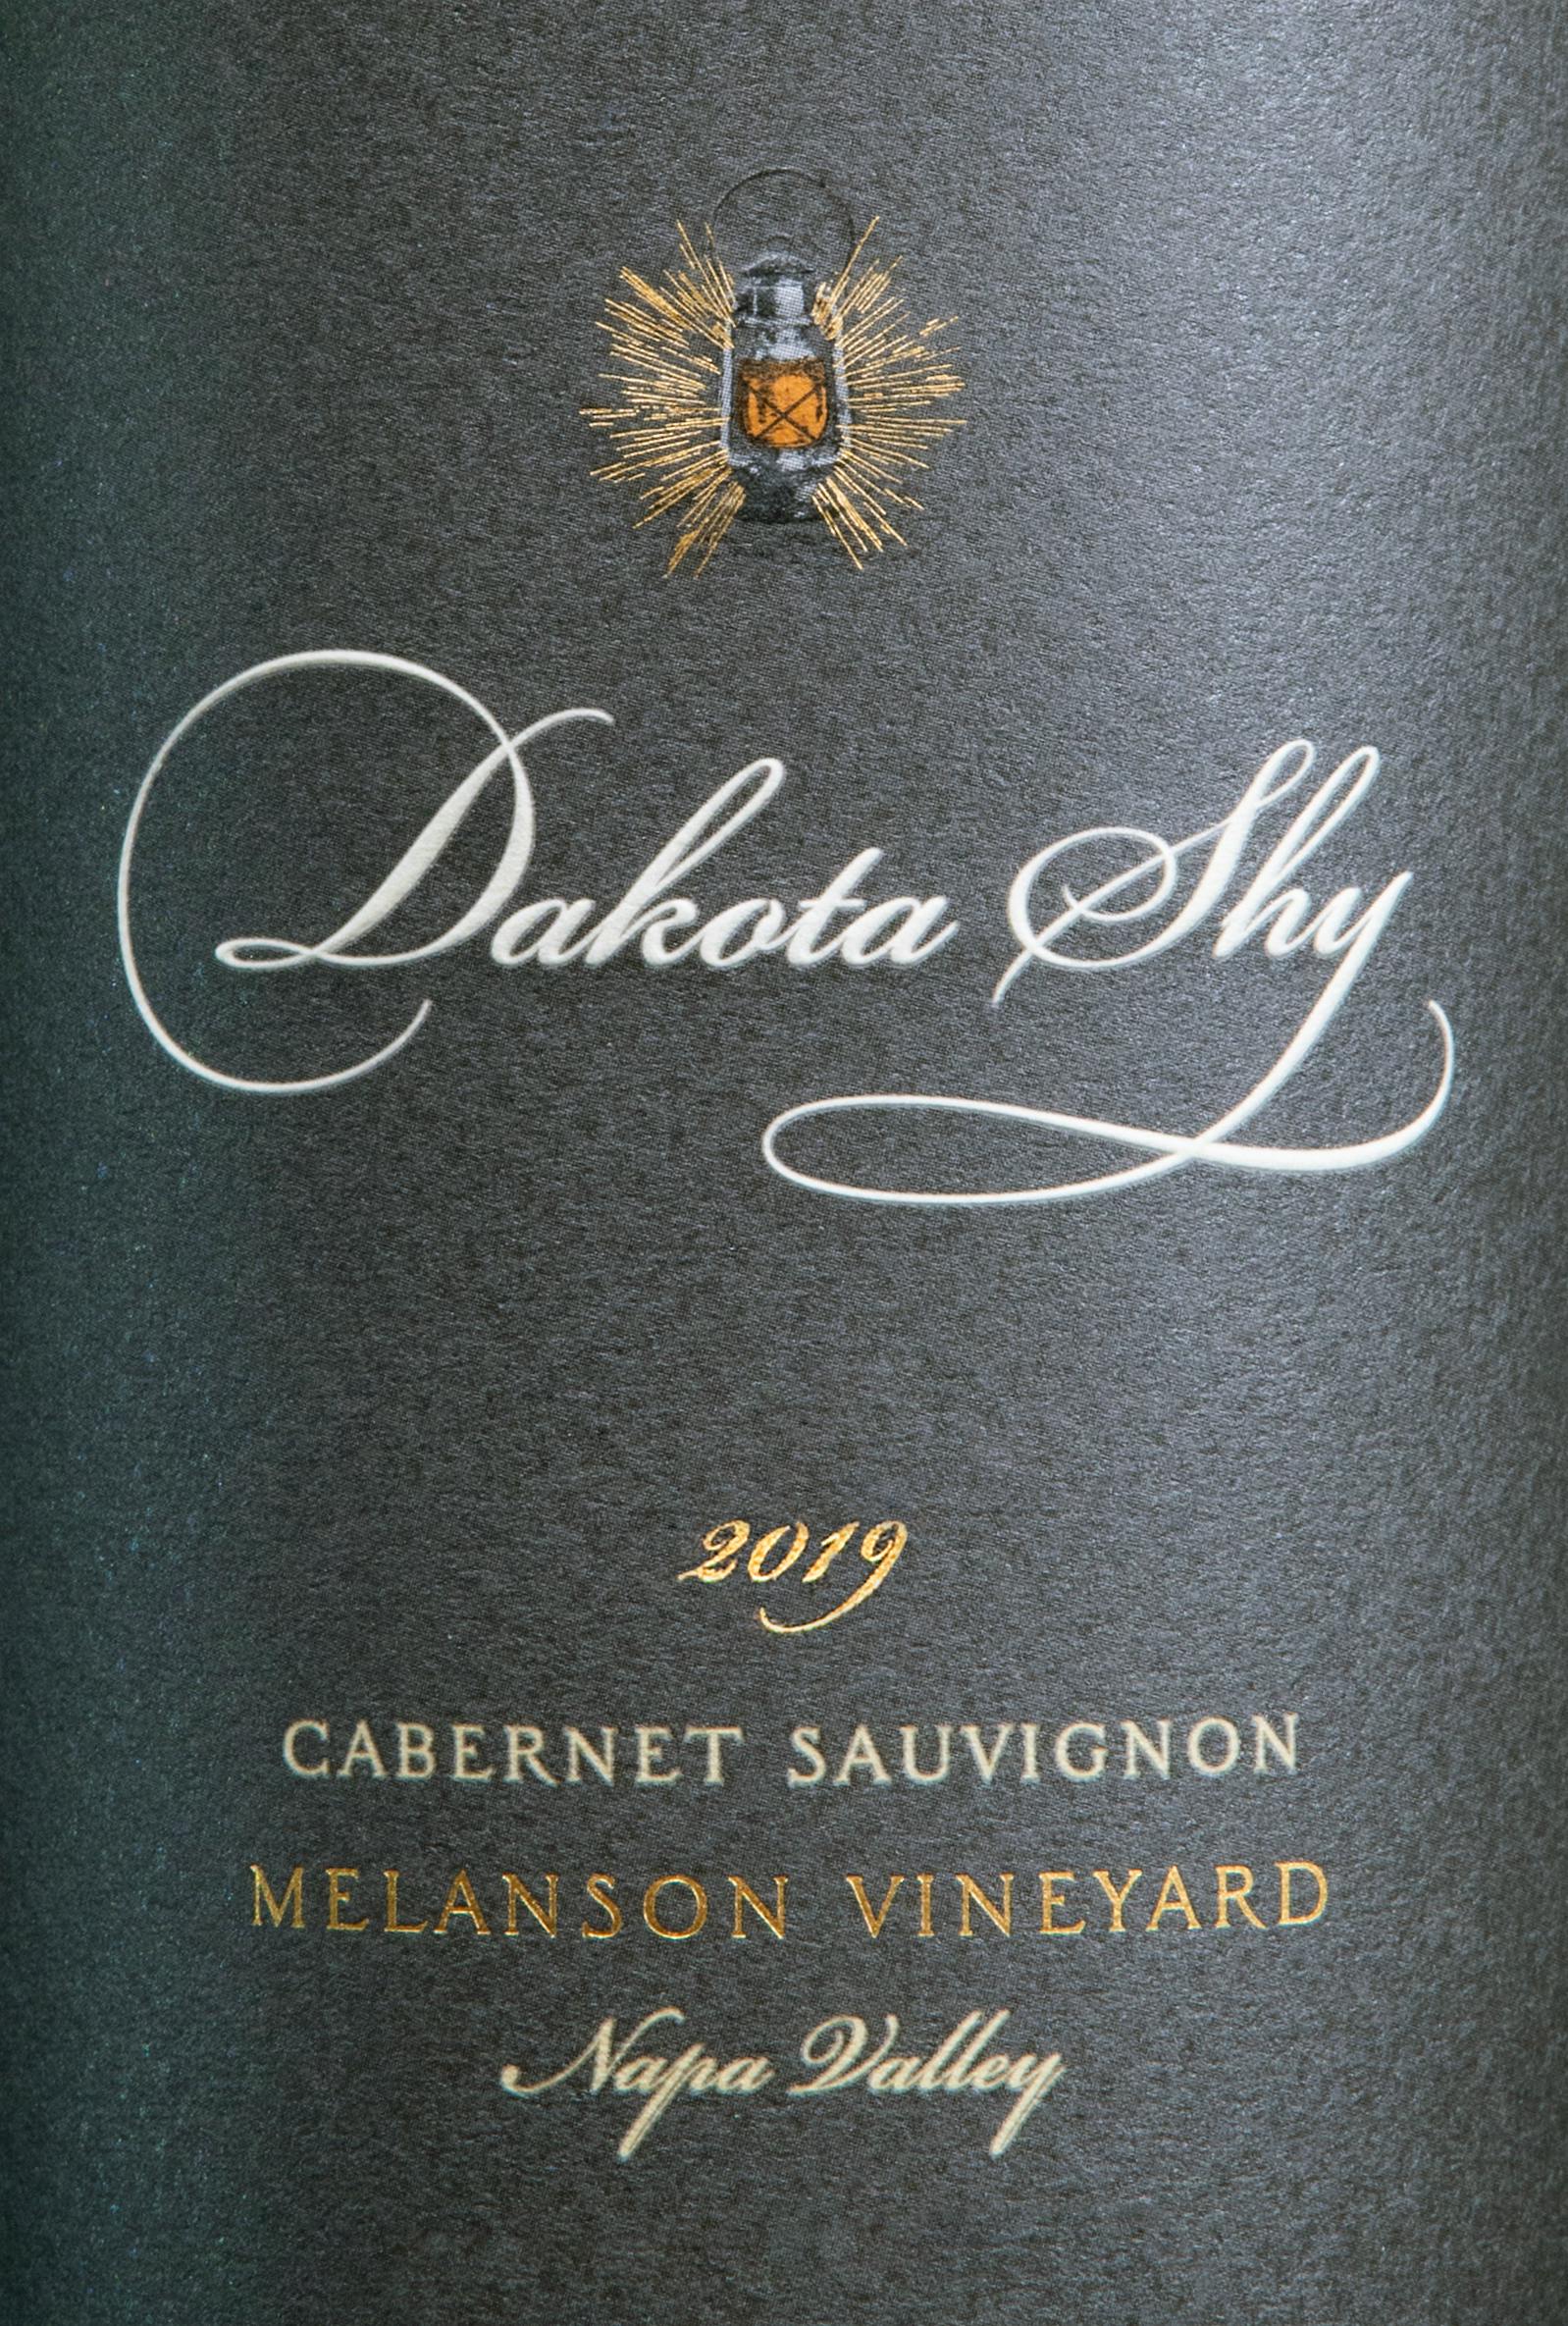 Label for Dakota Shy